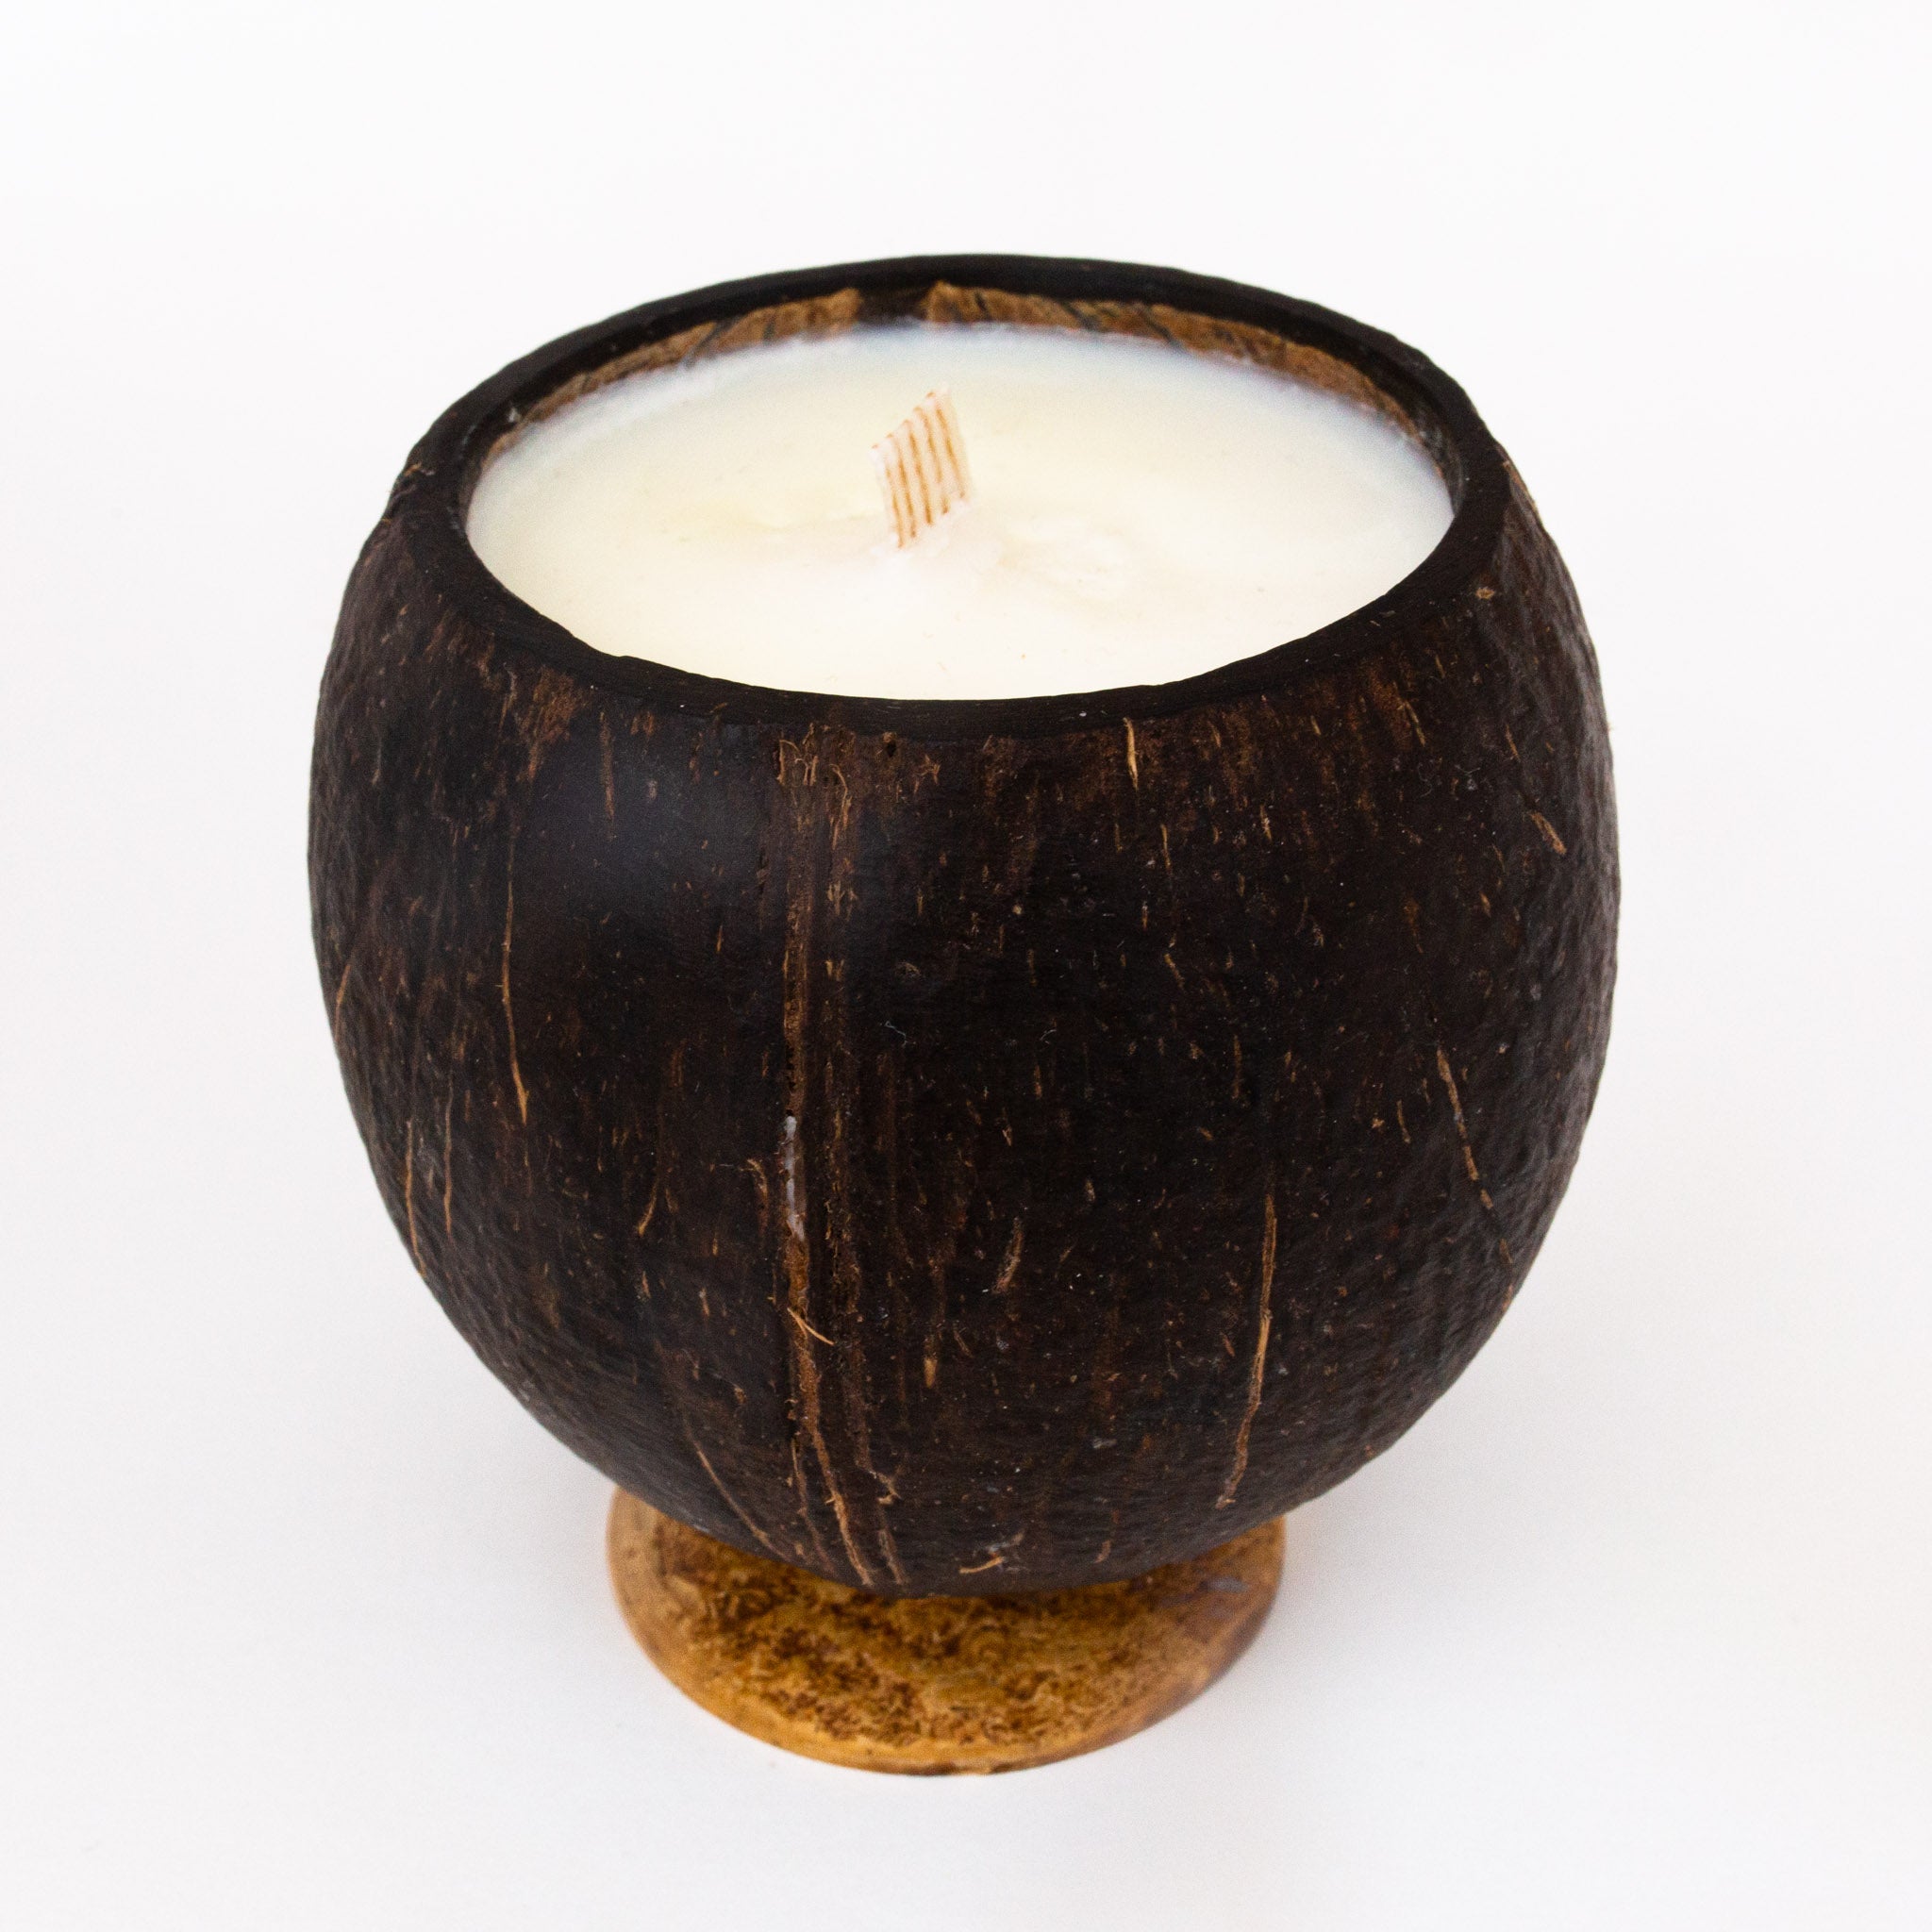 Whole Coconut Candle - Vanilla Chestnut